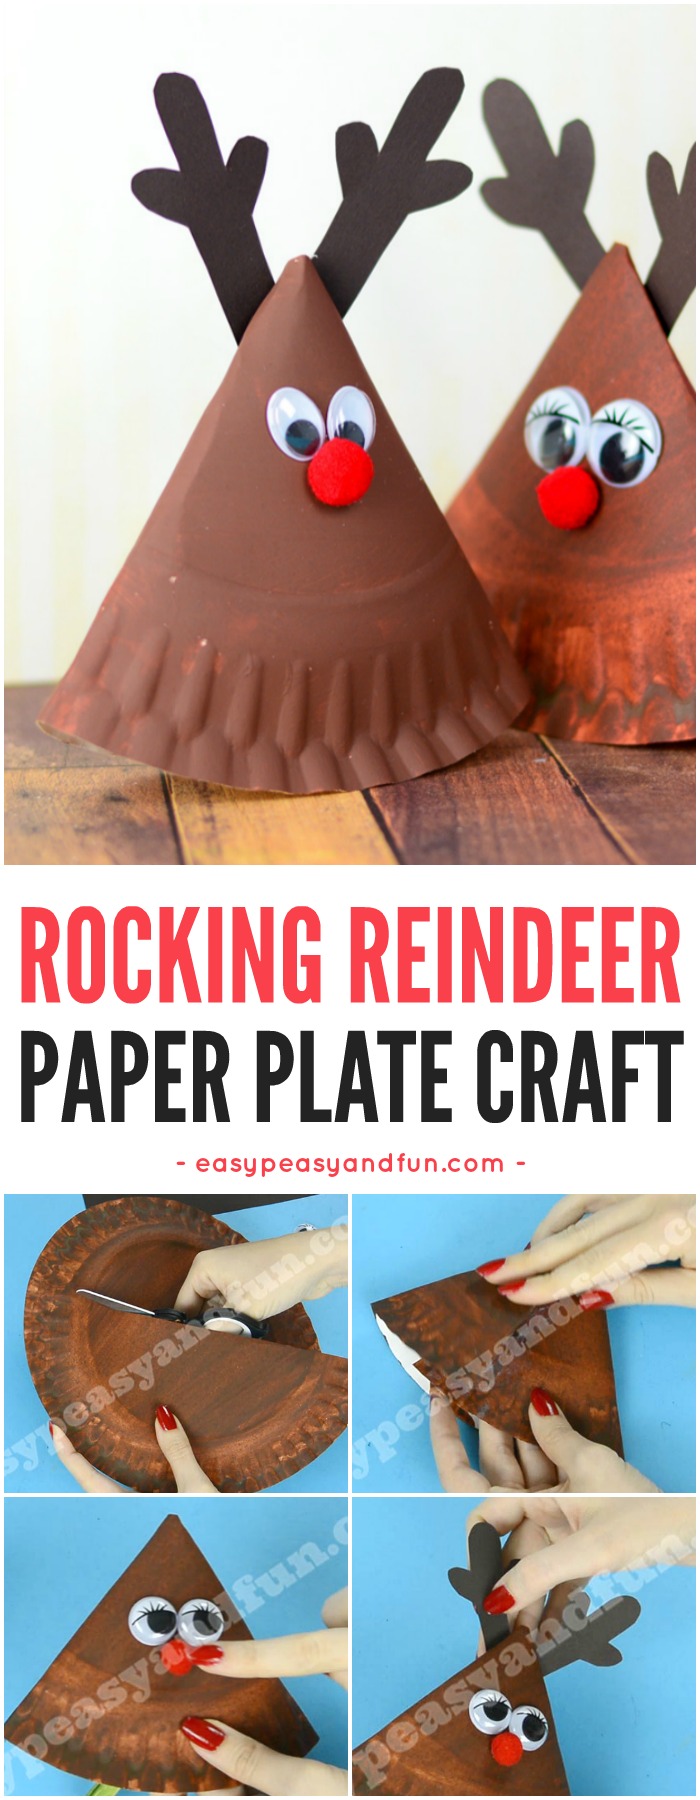 Cute rocking paper reindeer craft for kids.  Super fun Christmas craft idea for kids.